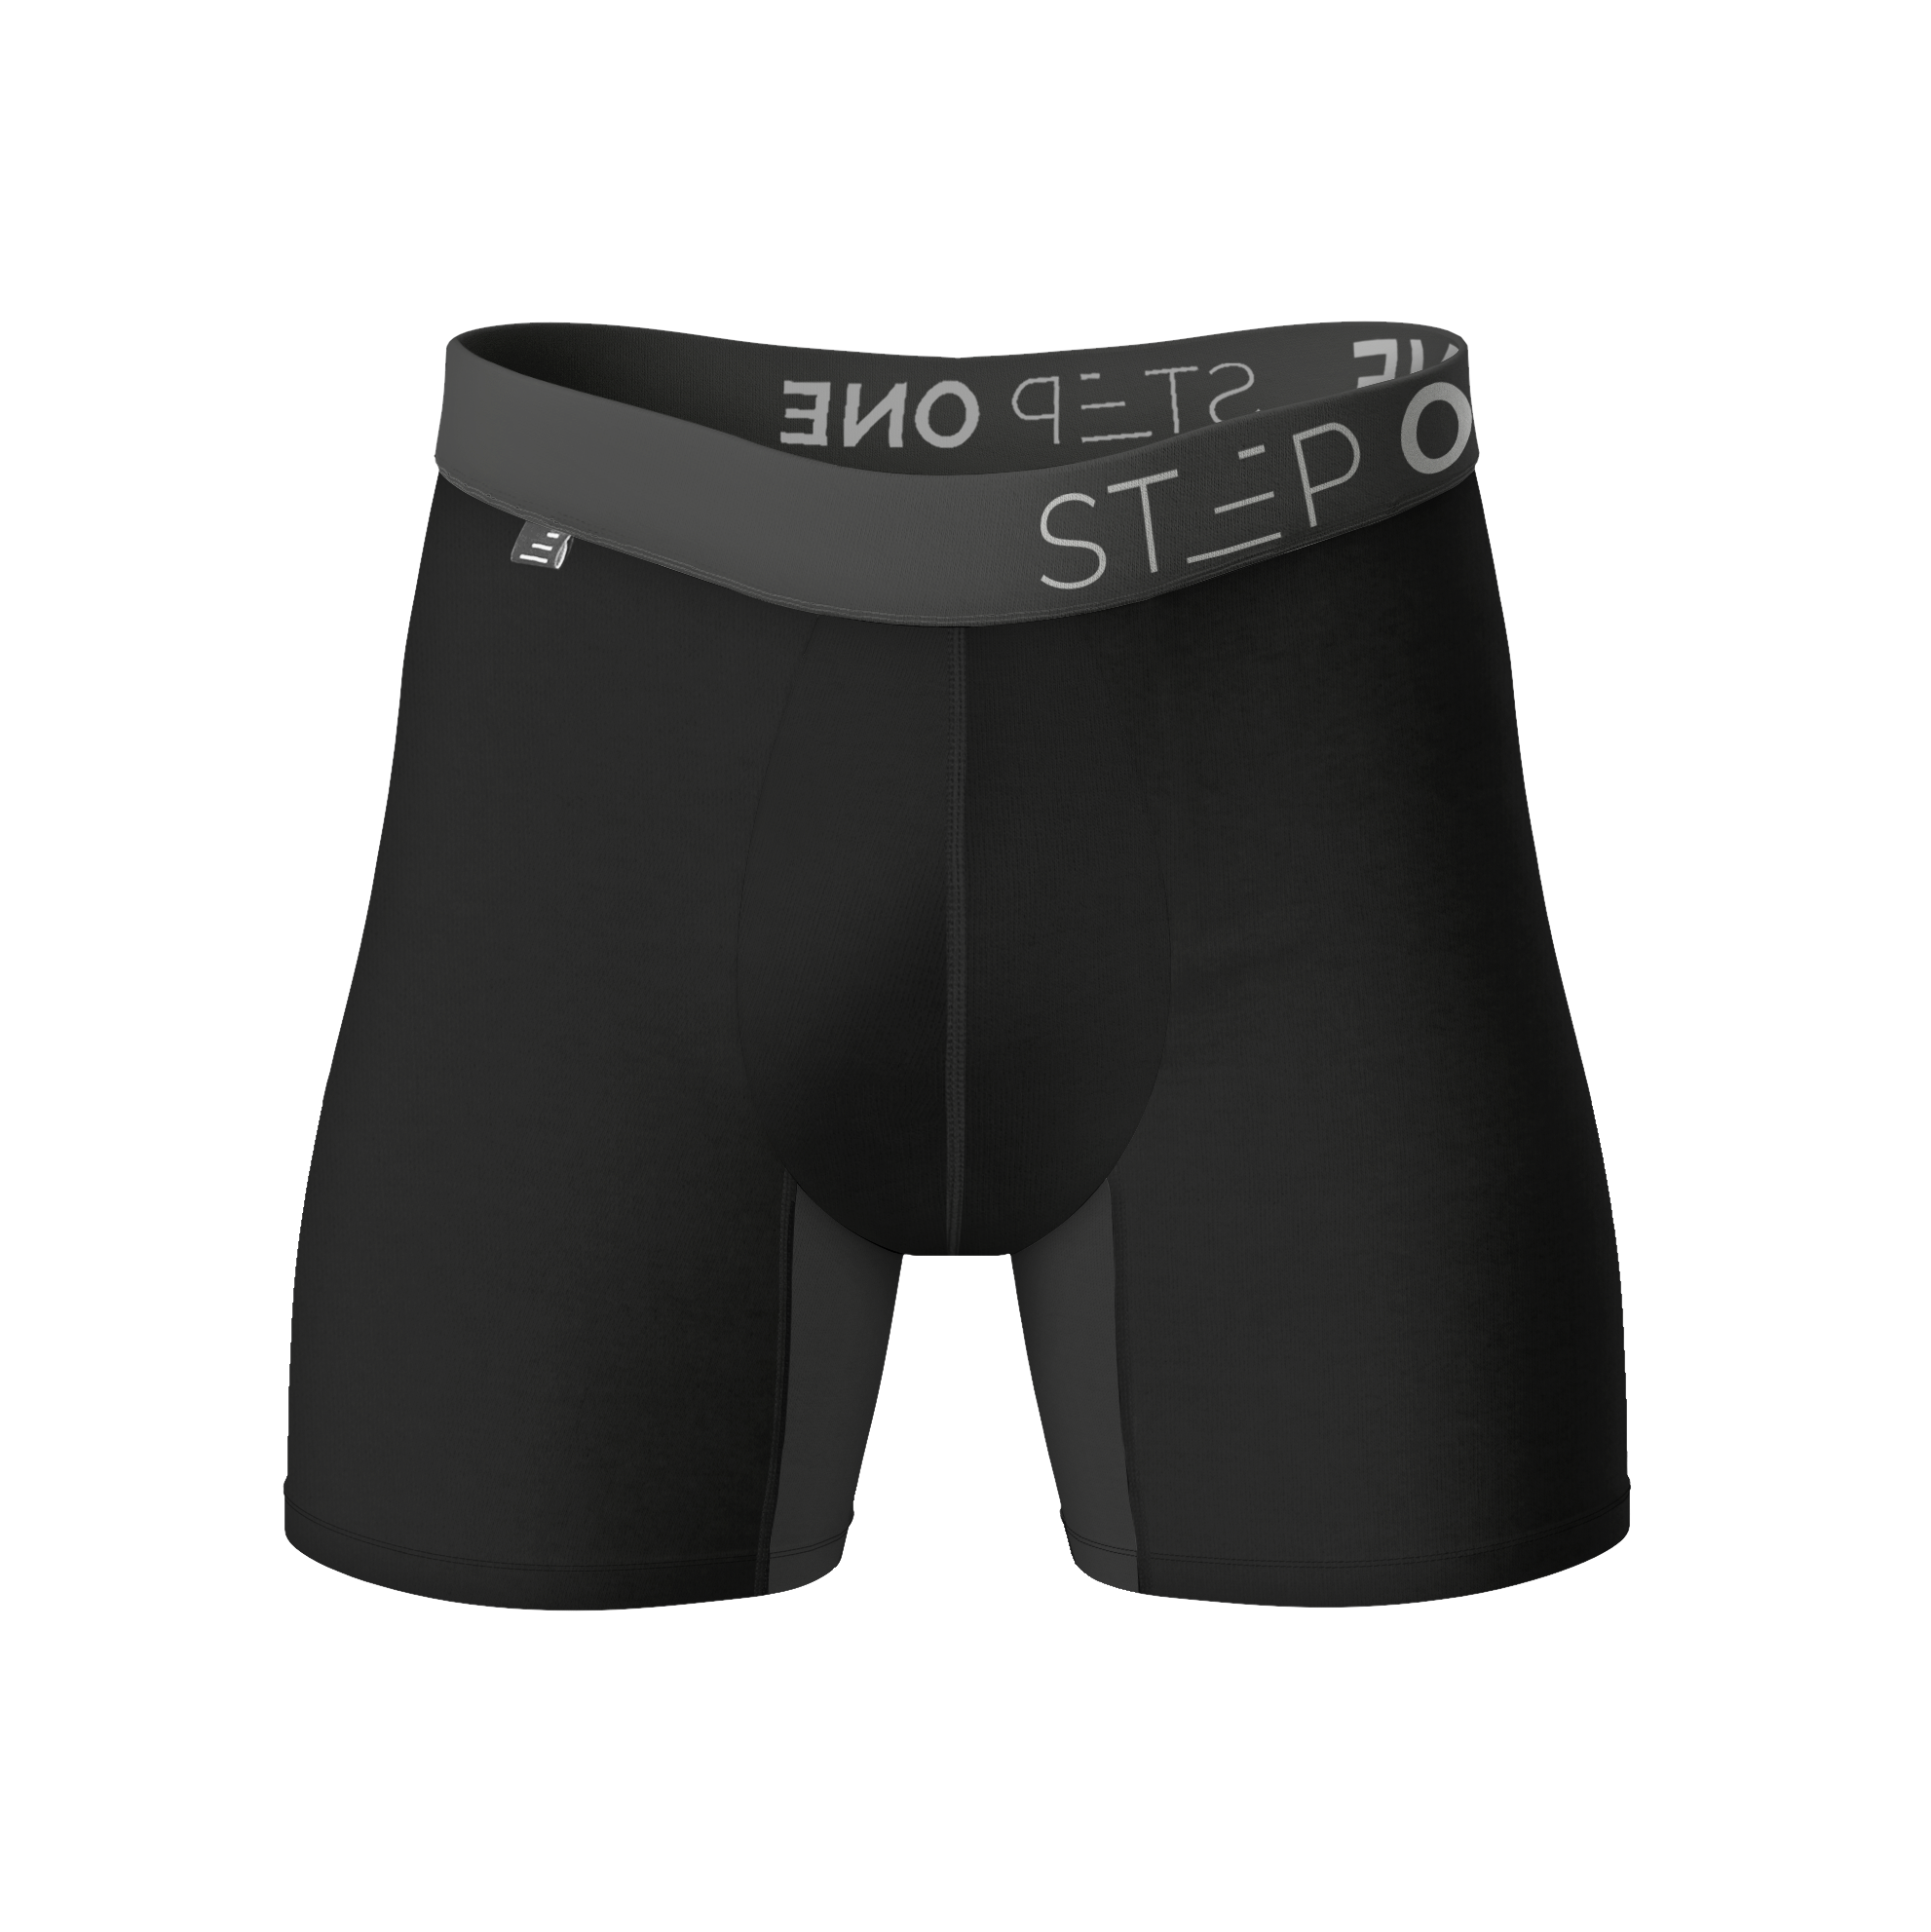 Black Bamboo Trunk Underwear